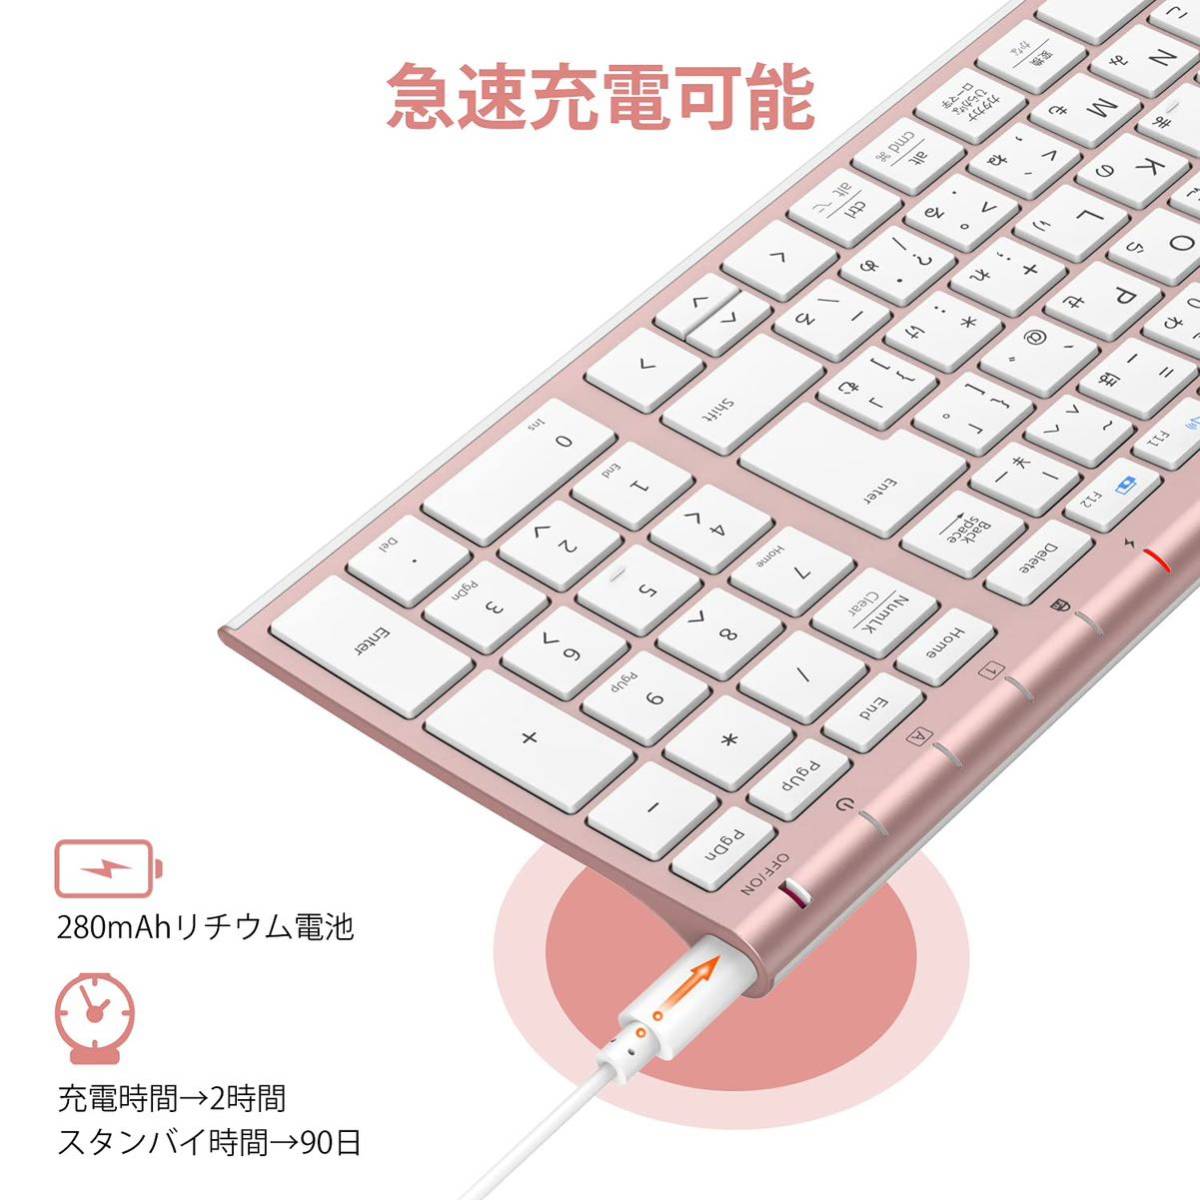 iClever キーボードワイヤレスキーボード JIS基準 日本語配列 超薄型